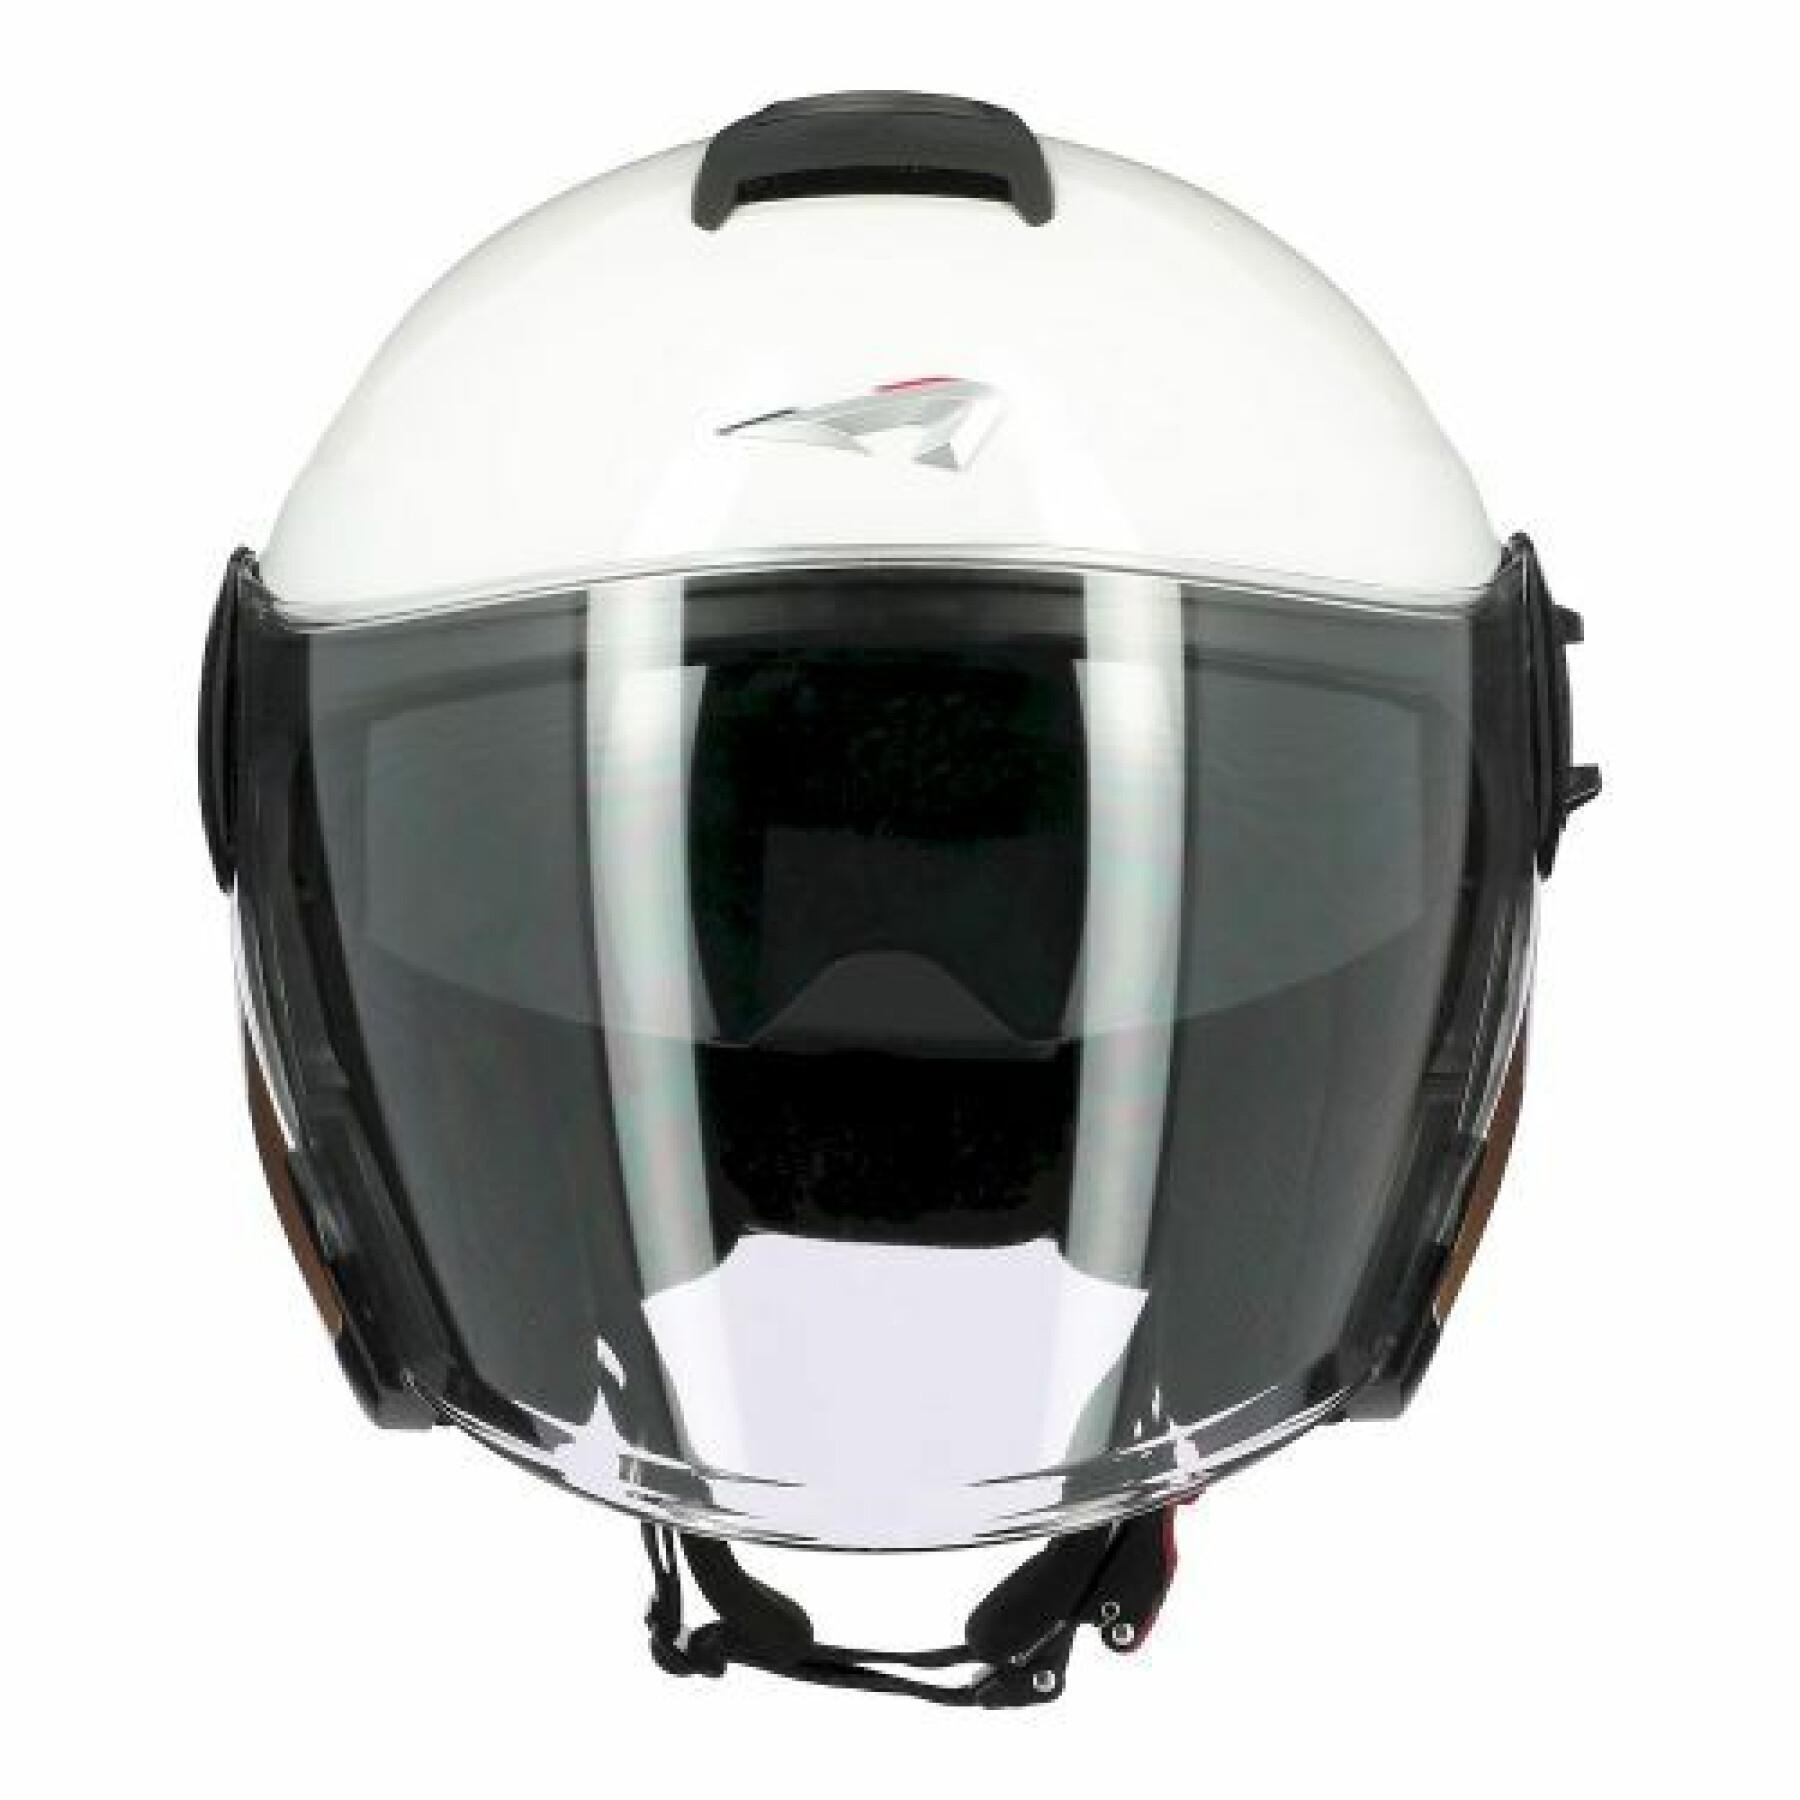 Jet motorcycle helmet Astone Dj10-2 Radian